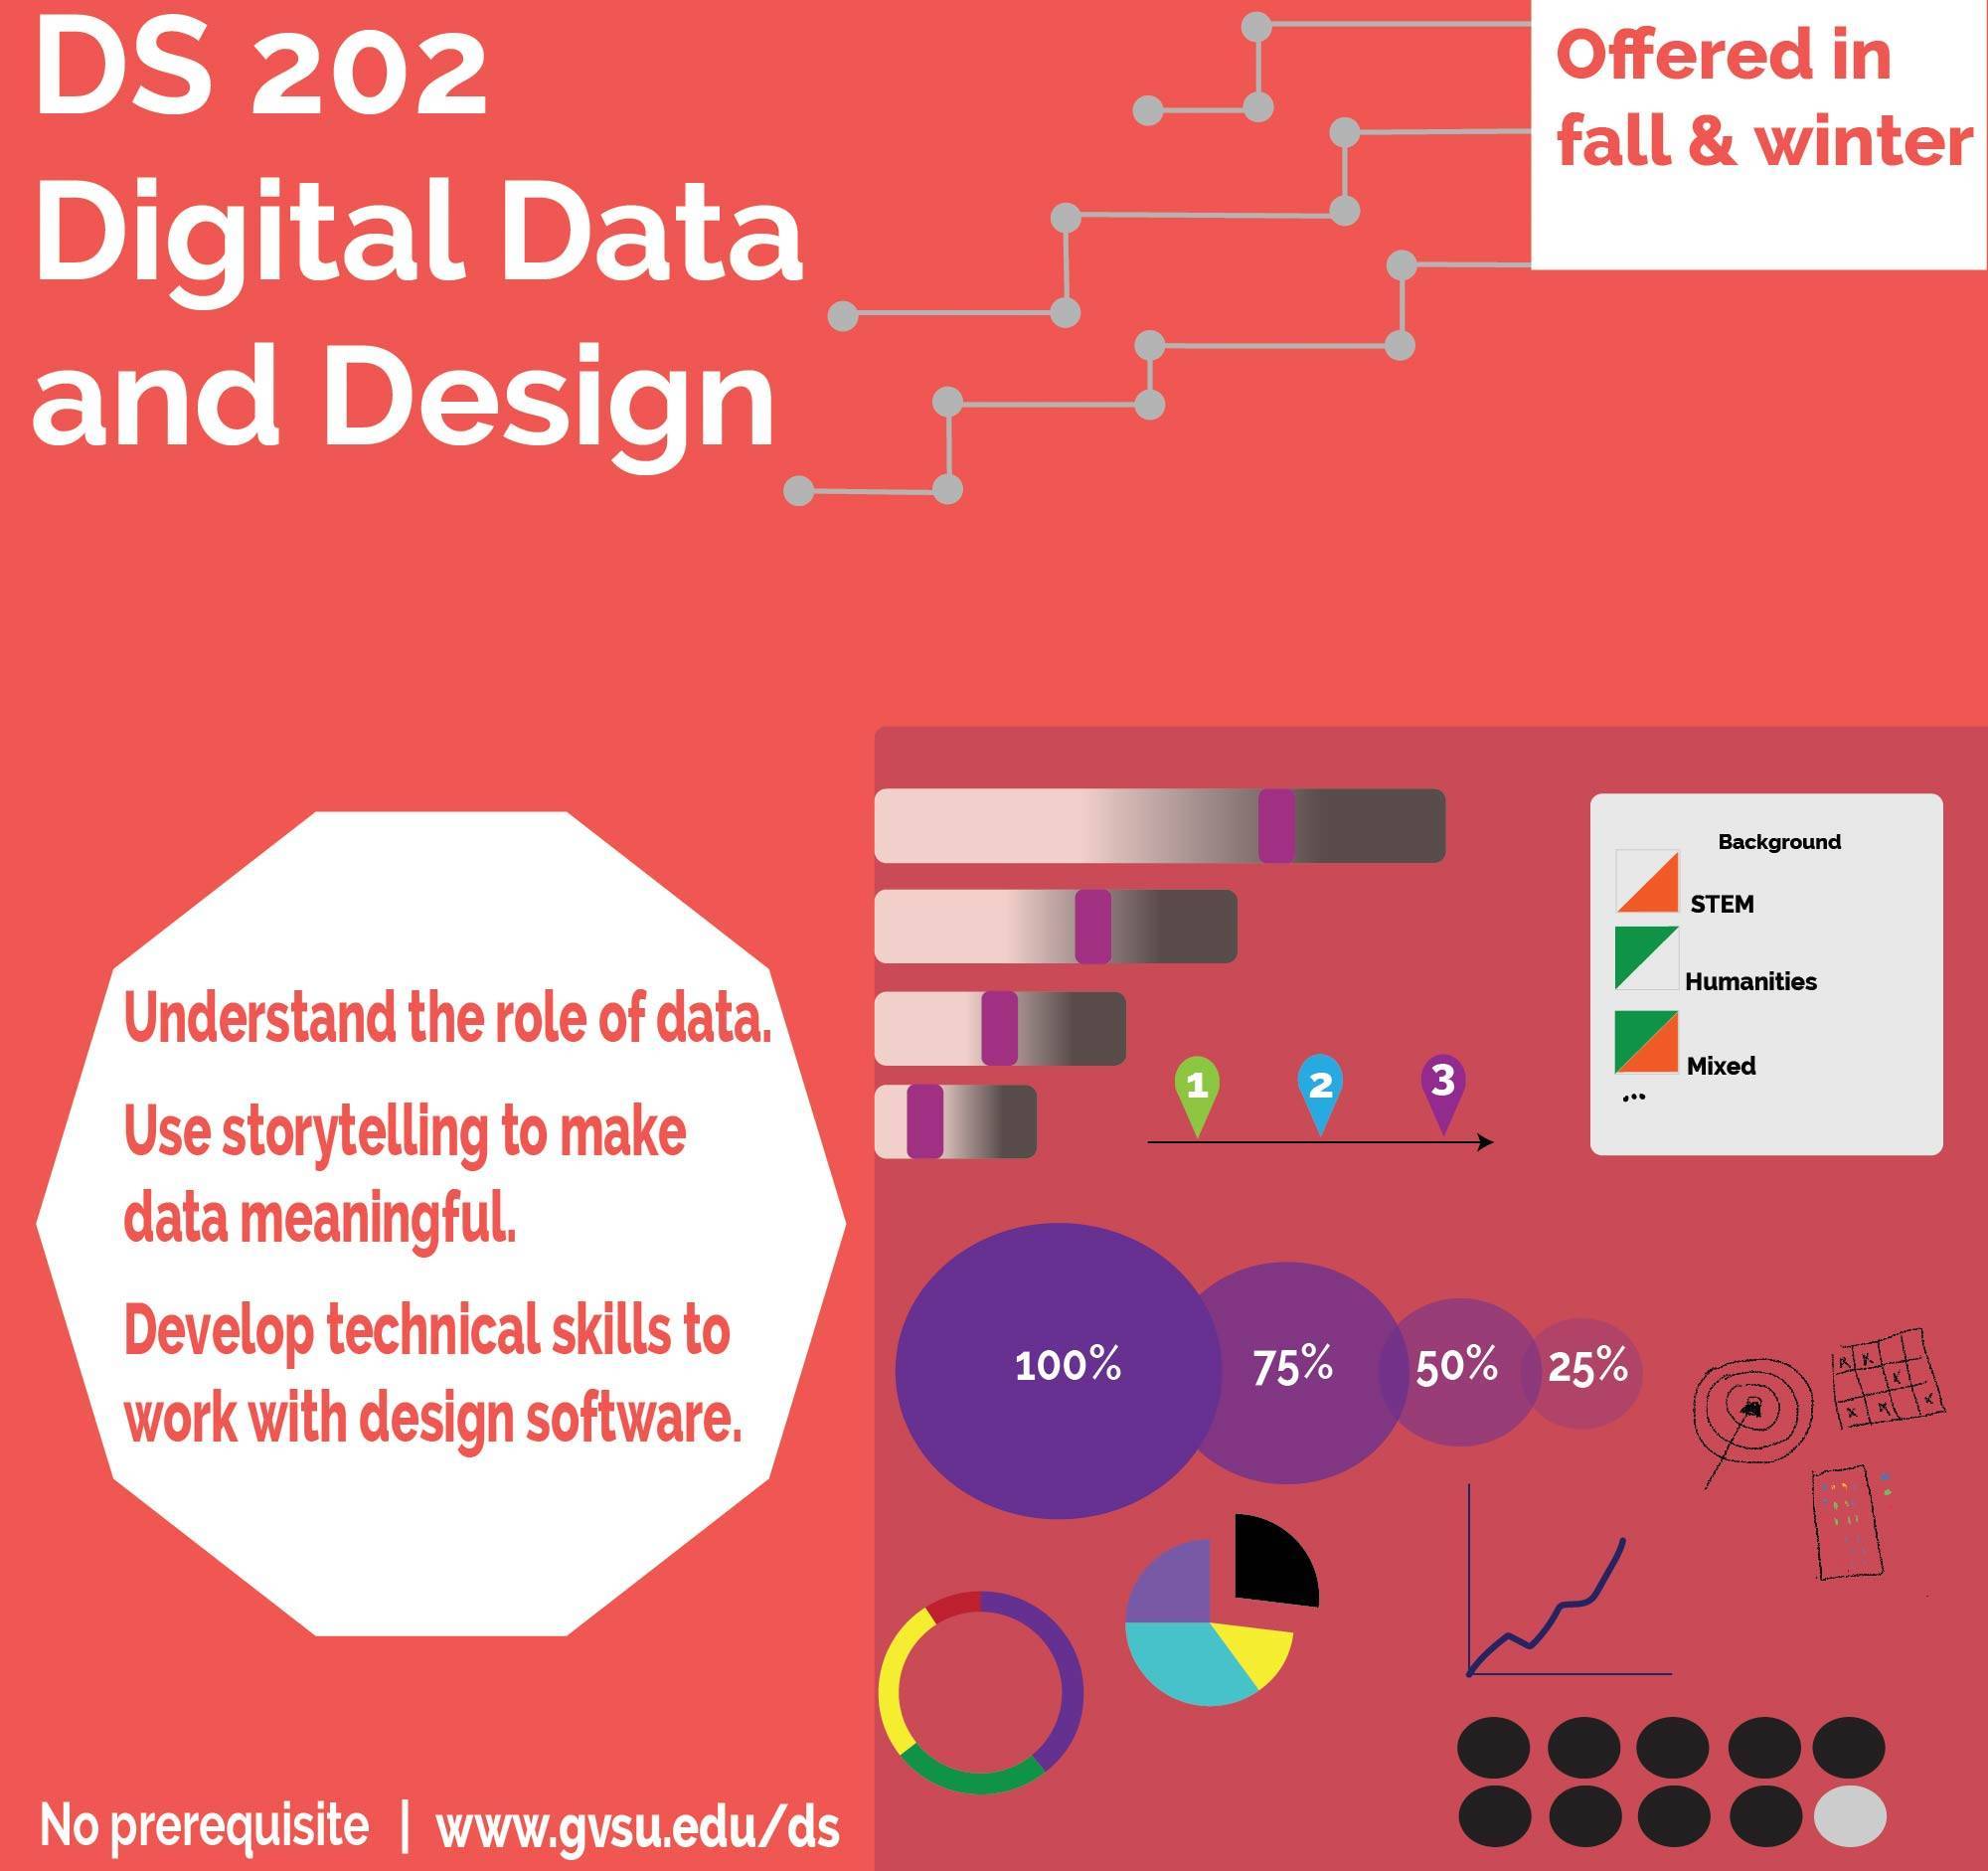 Digital Data and Design (DS 202)